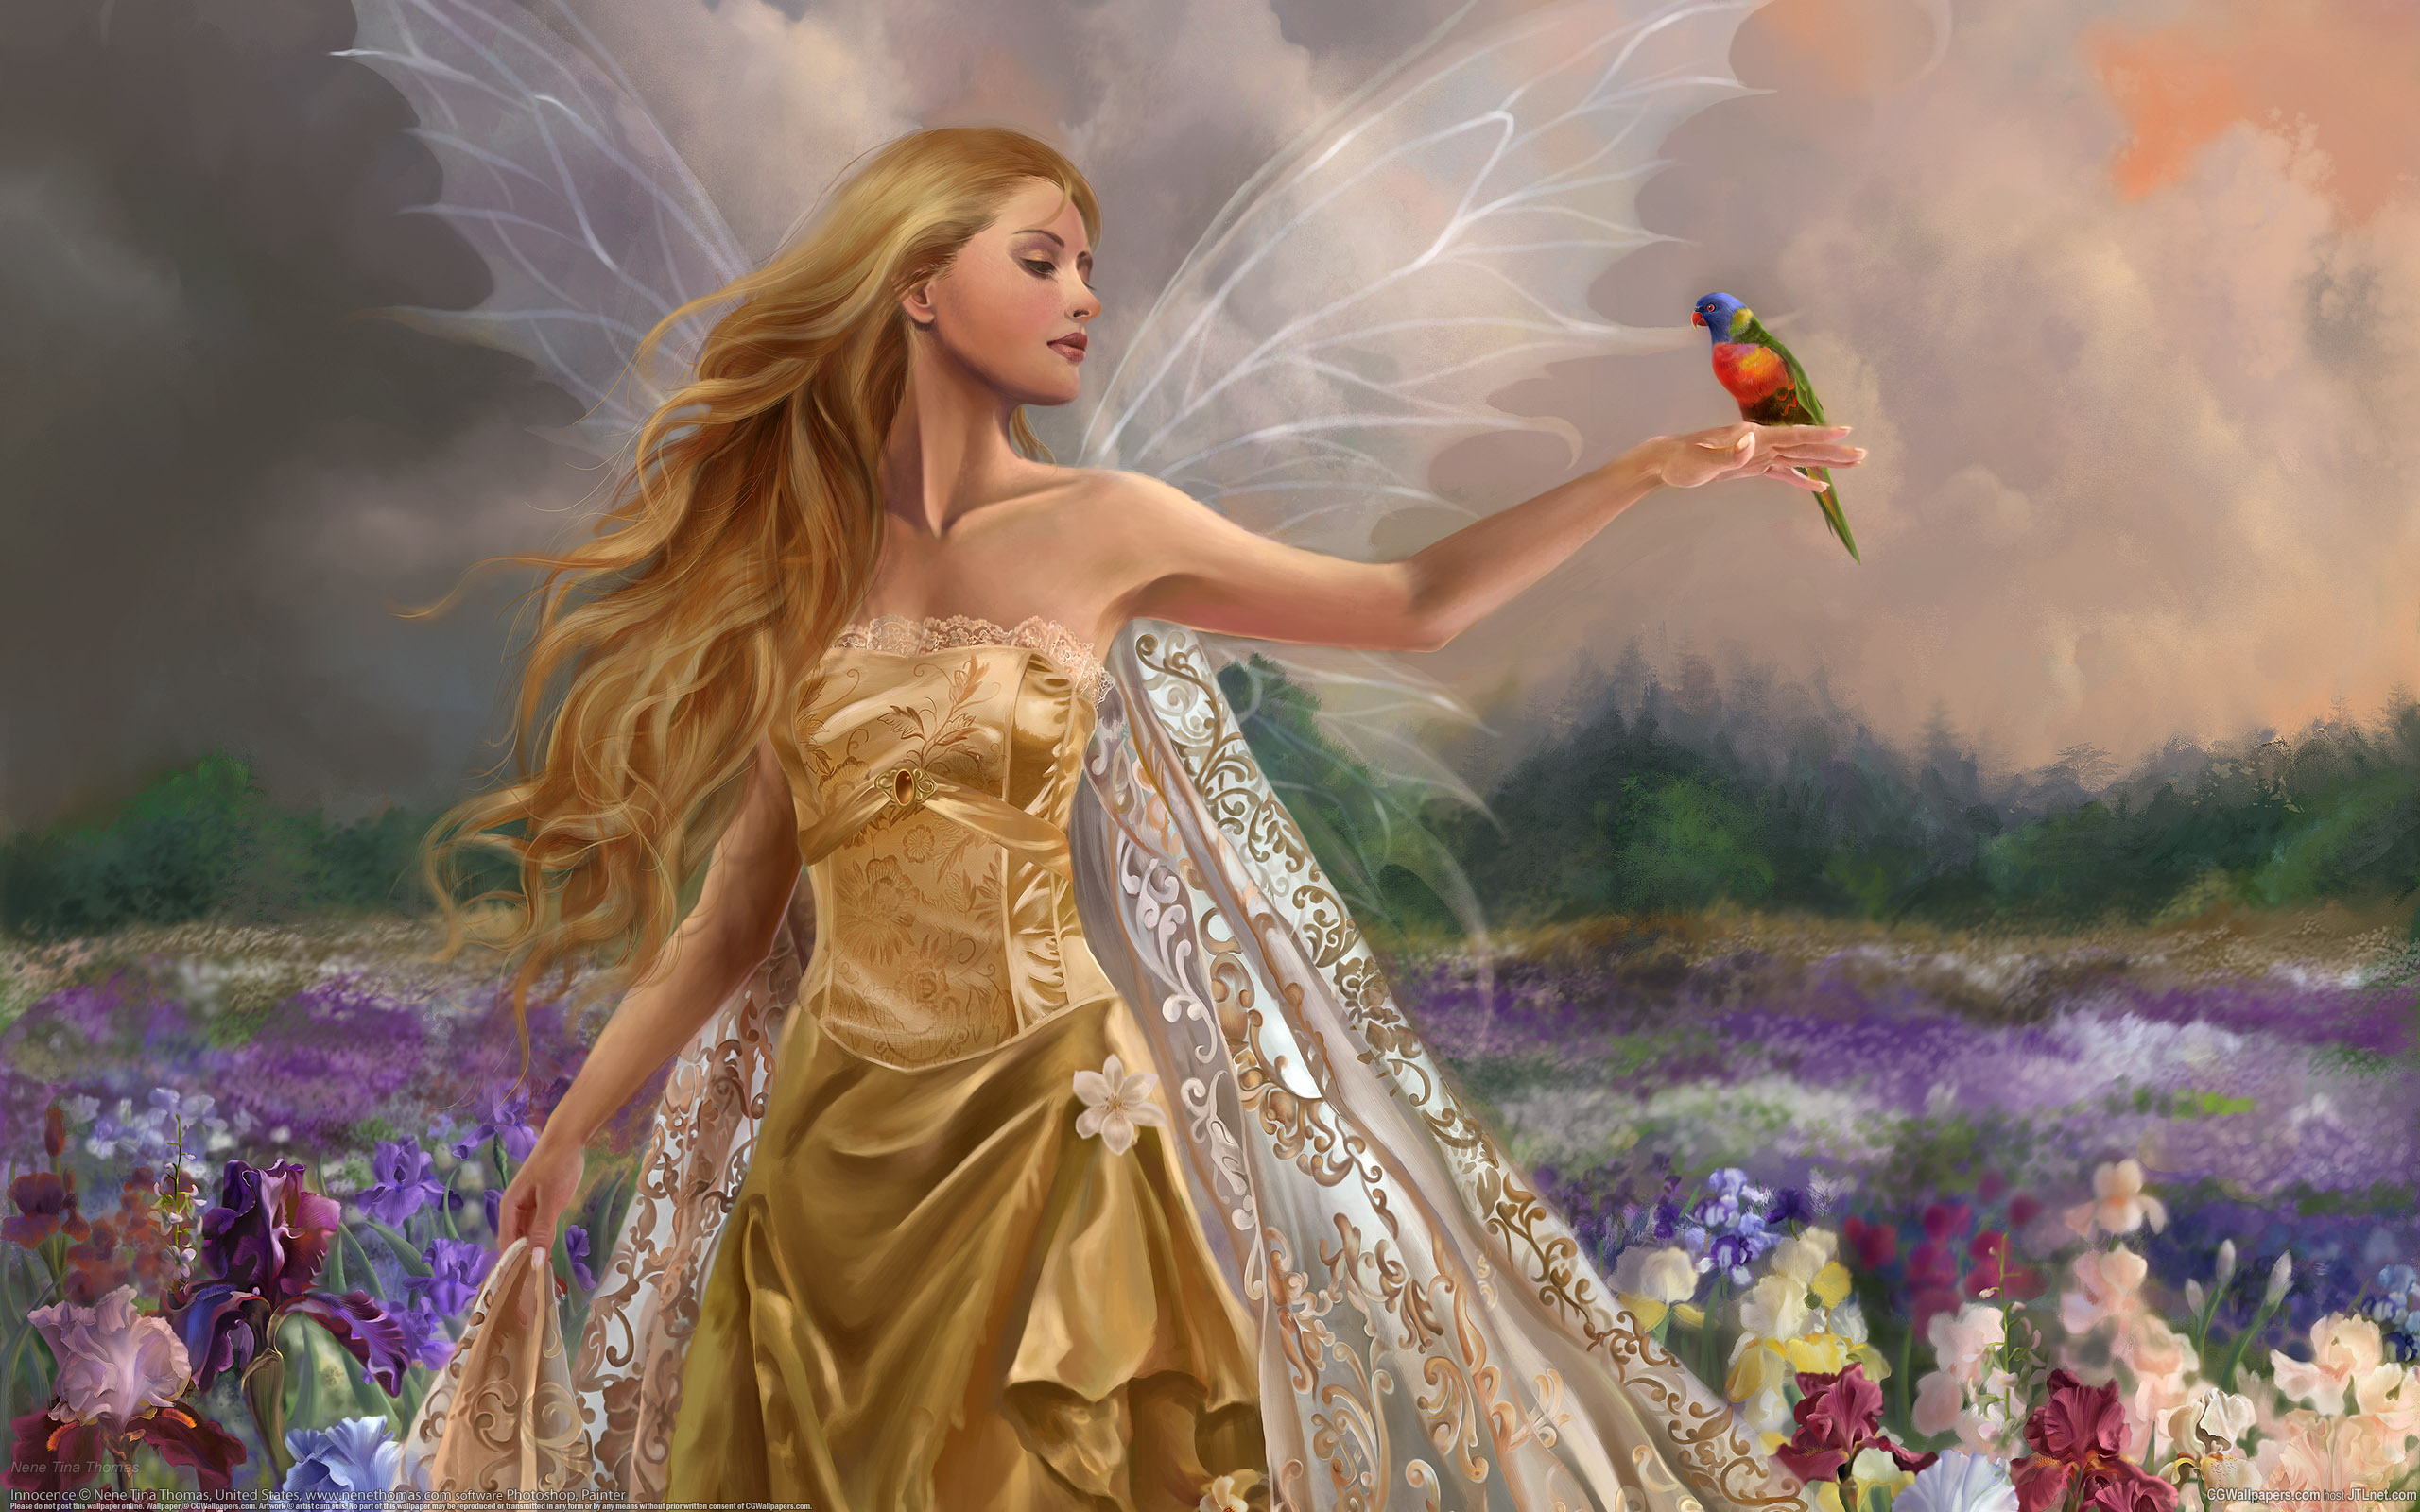 Beautiful Butterfly Fairy Angel Wallpaper | Photo | Fair Usage